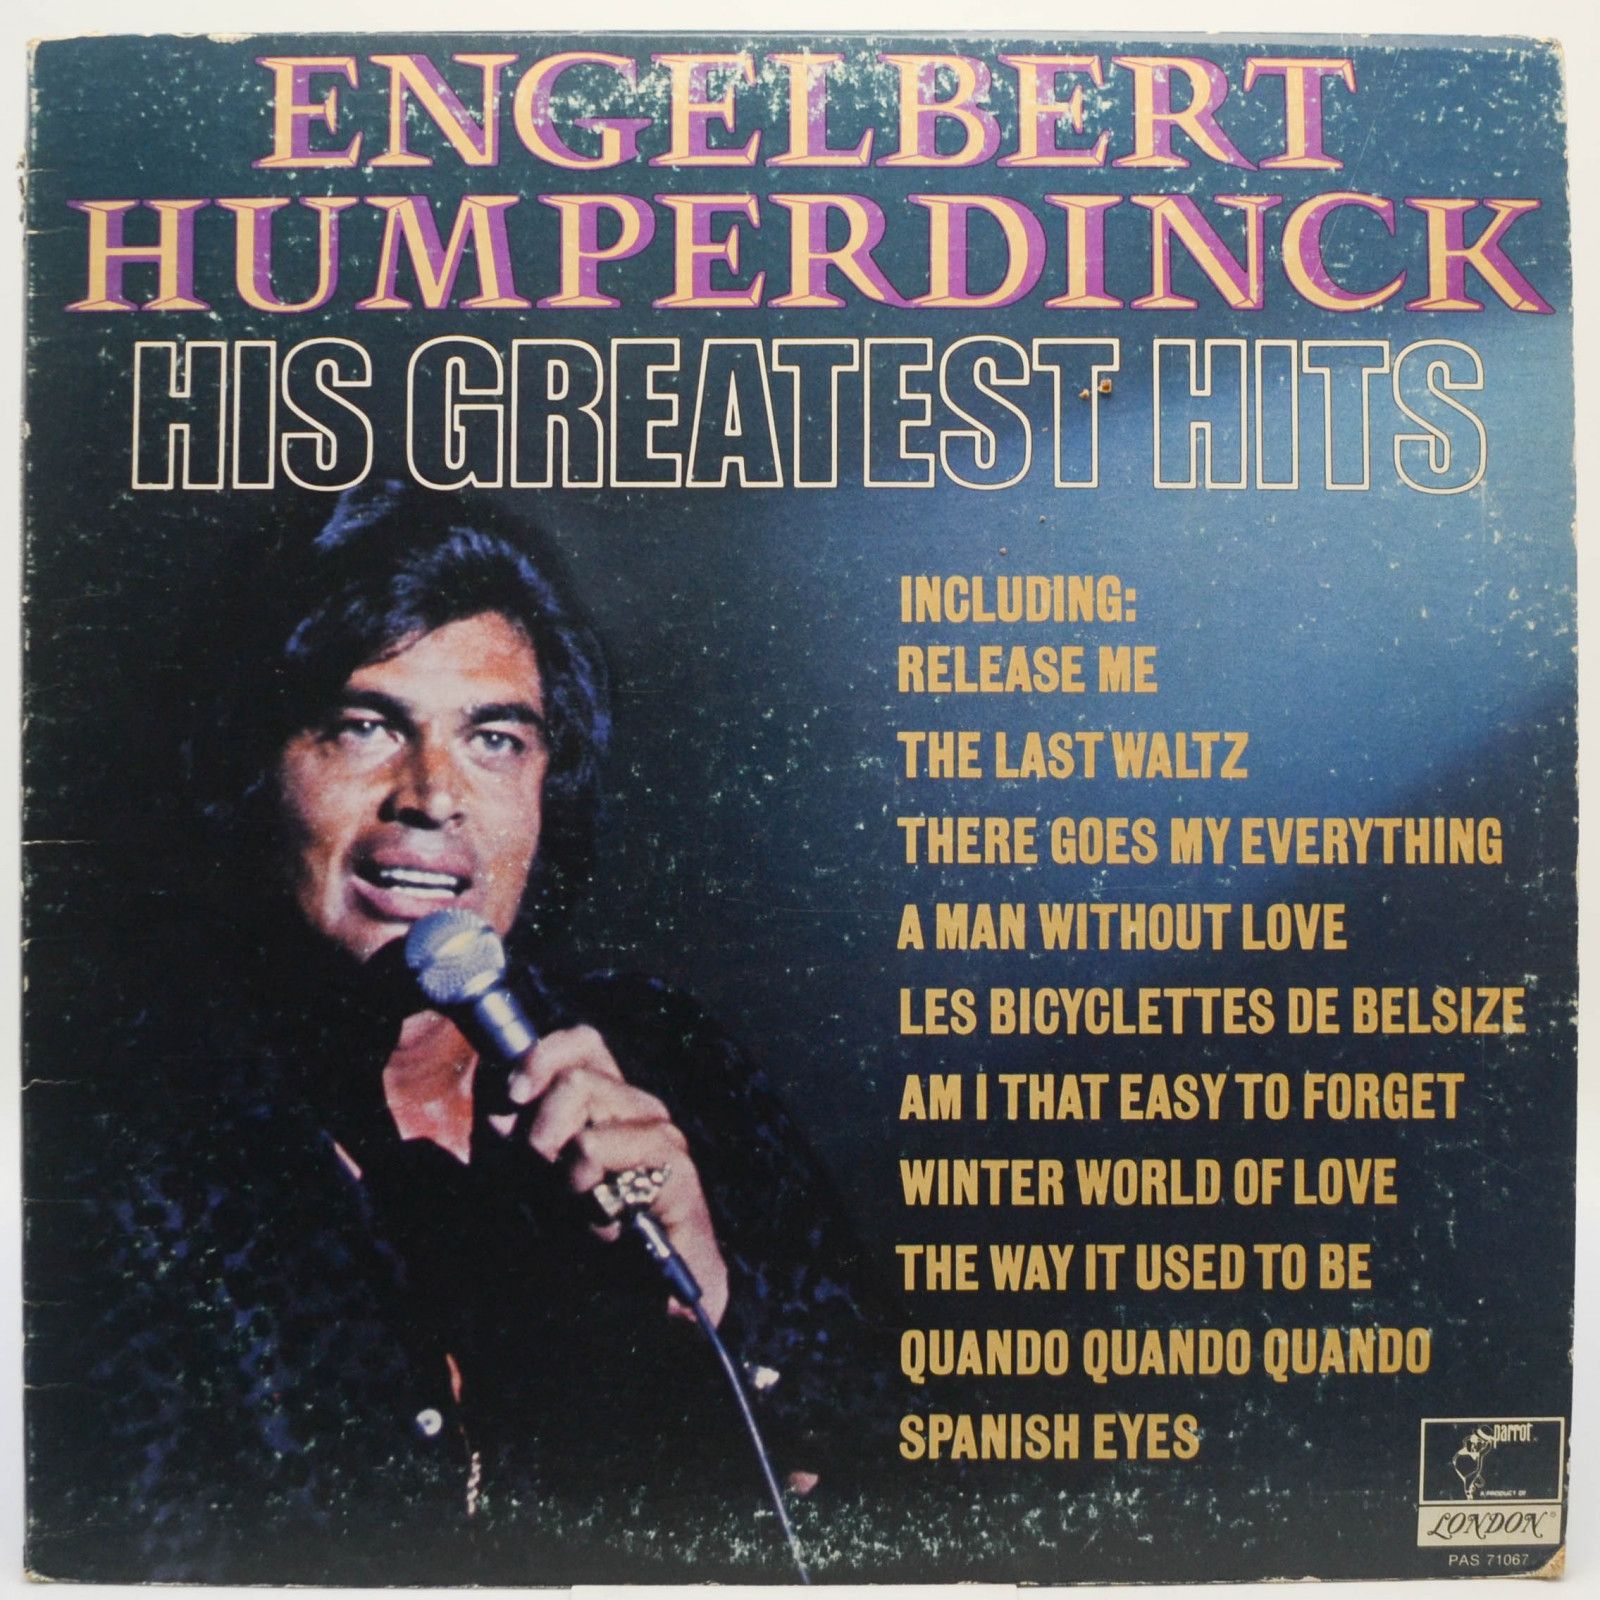 Engelbert Humperdinck — His Greatest Hits, 1974